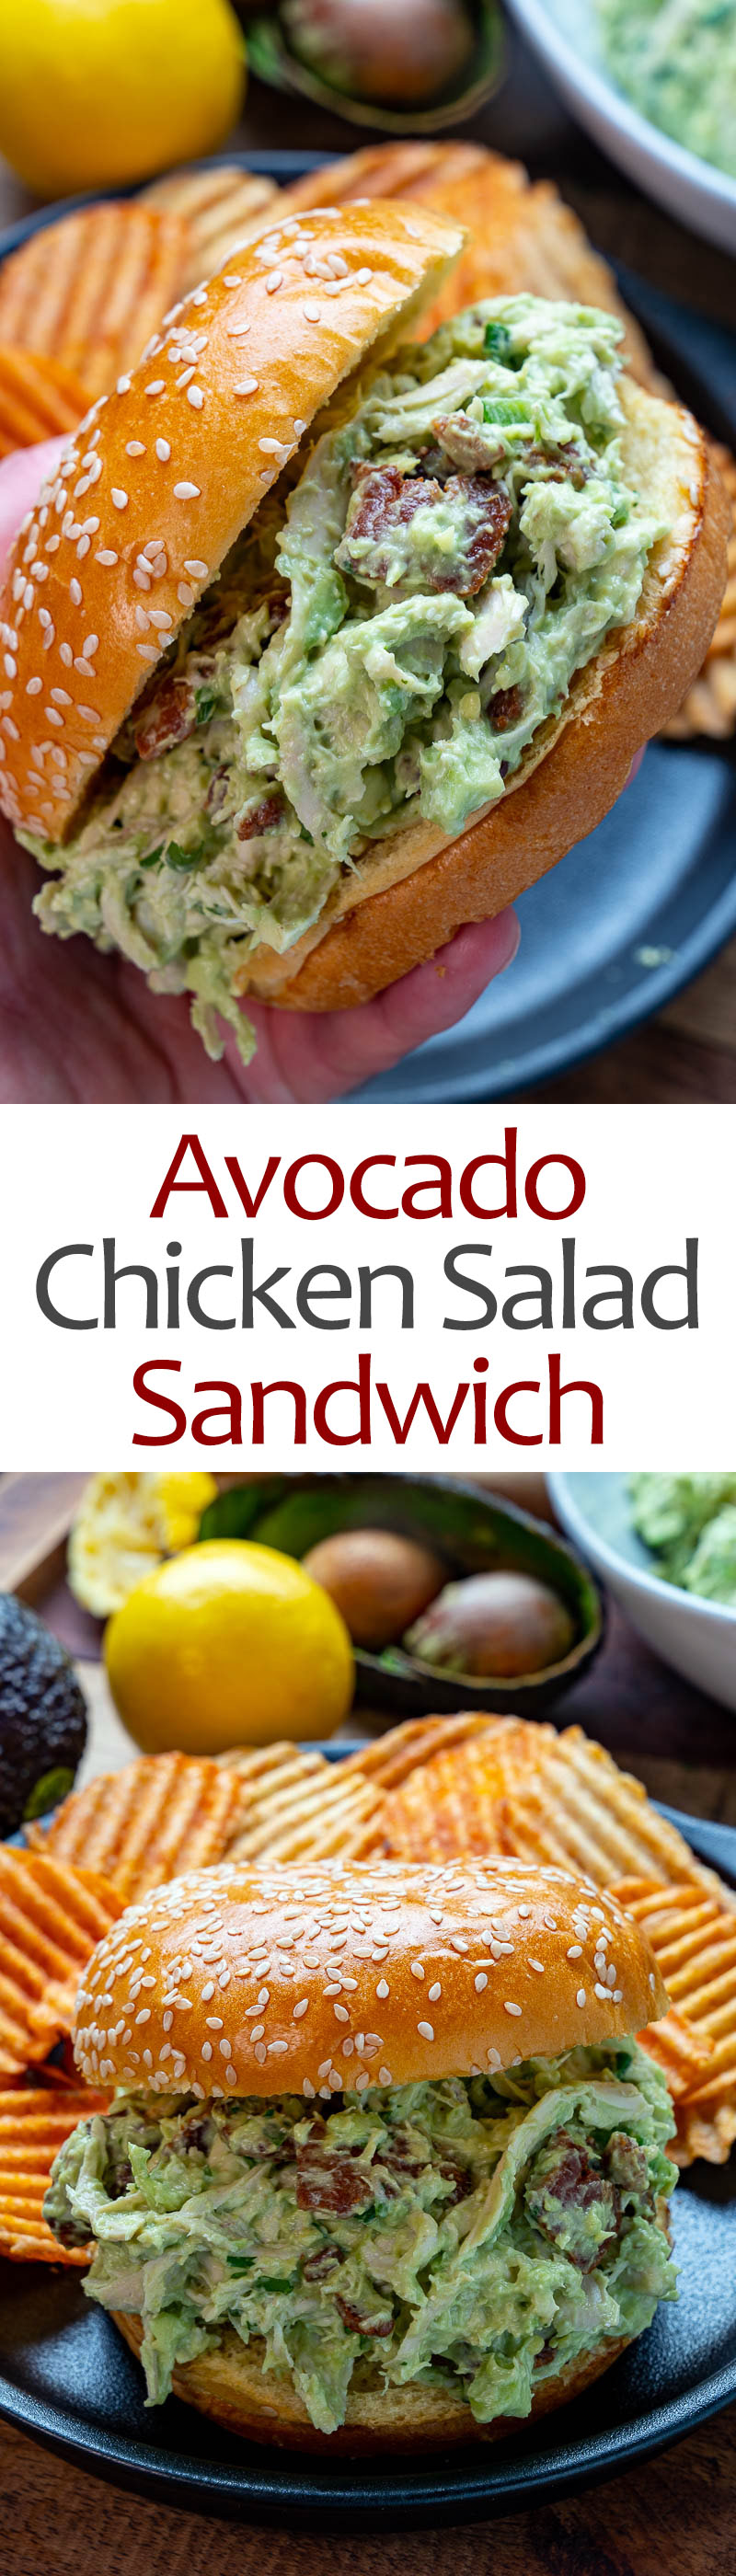 Avocado Chicken Salad Sandwich